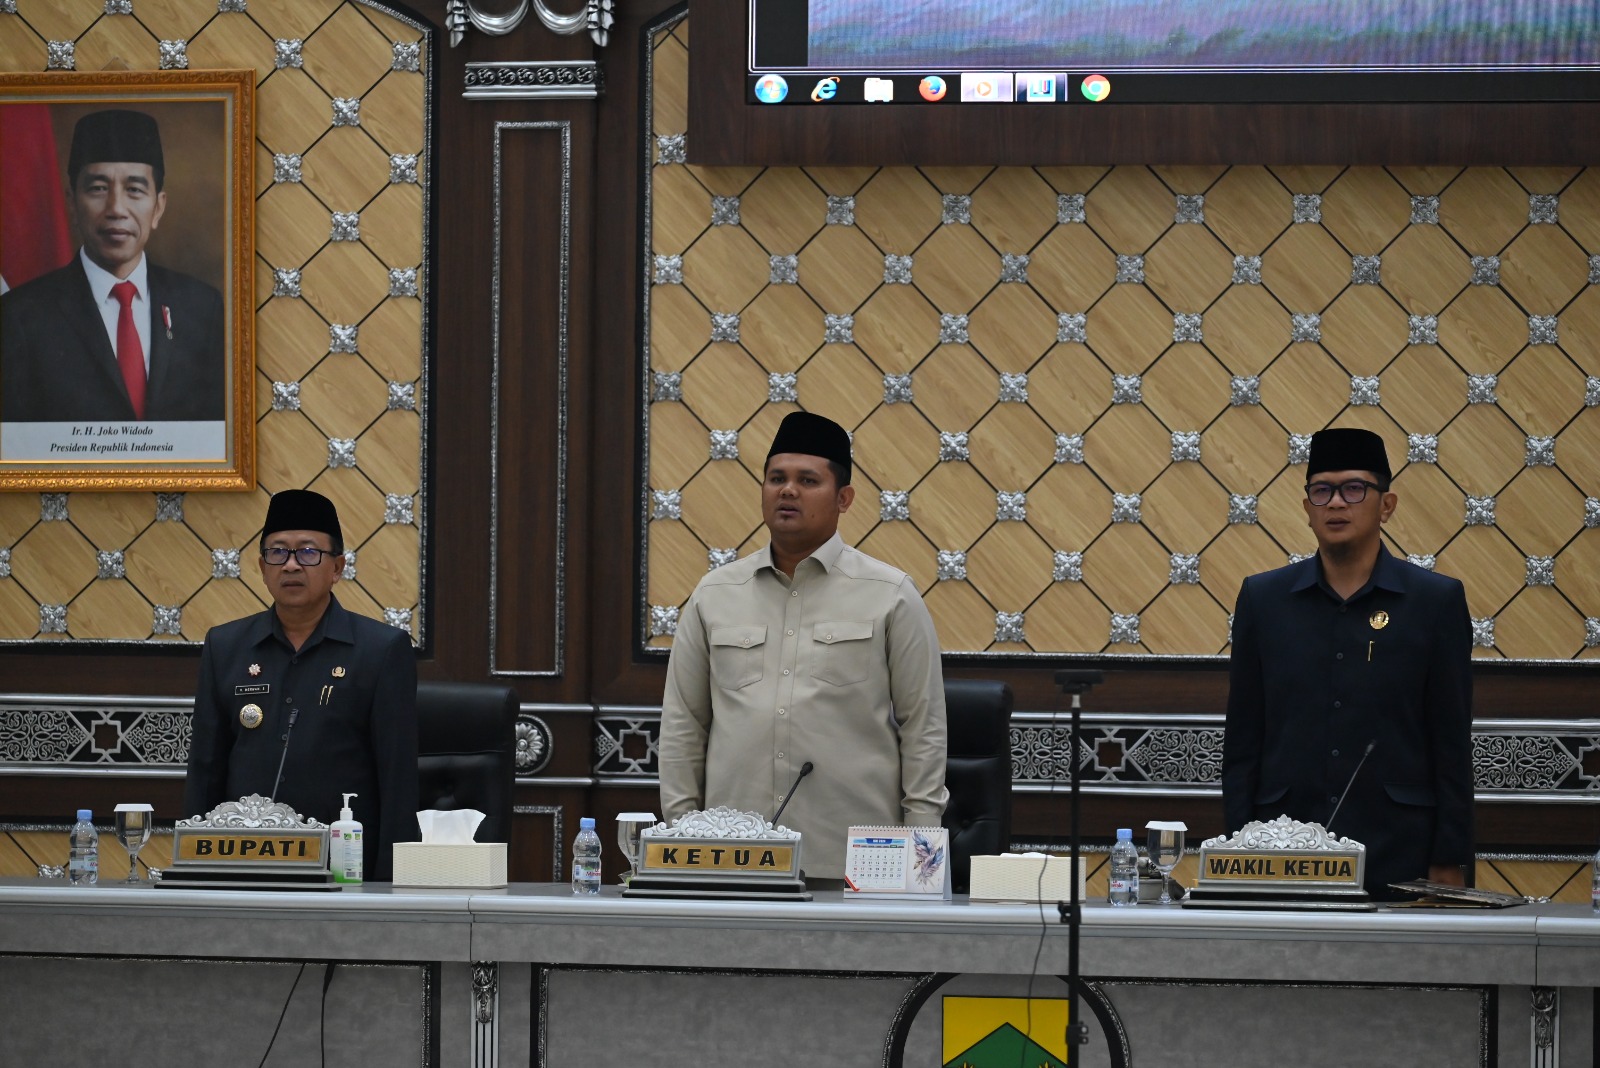 Rapat Paripurna Dewan Perwakilan Rakyat Daerah Kabupaten Cianjur